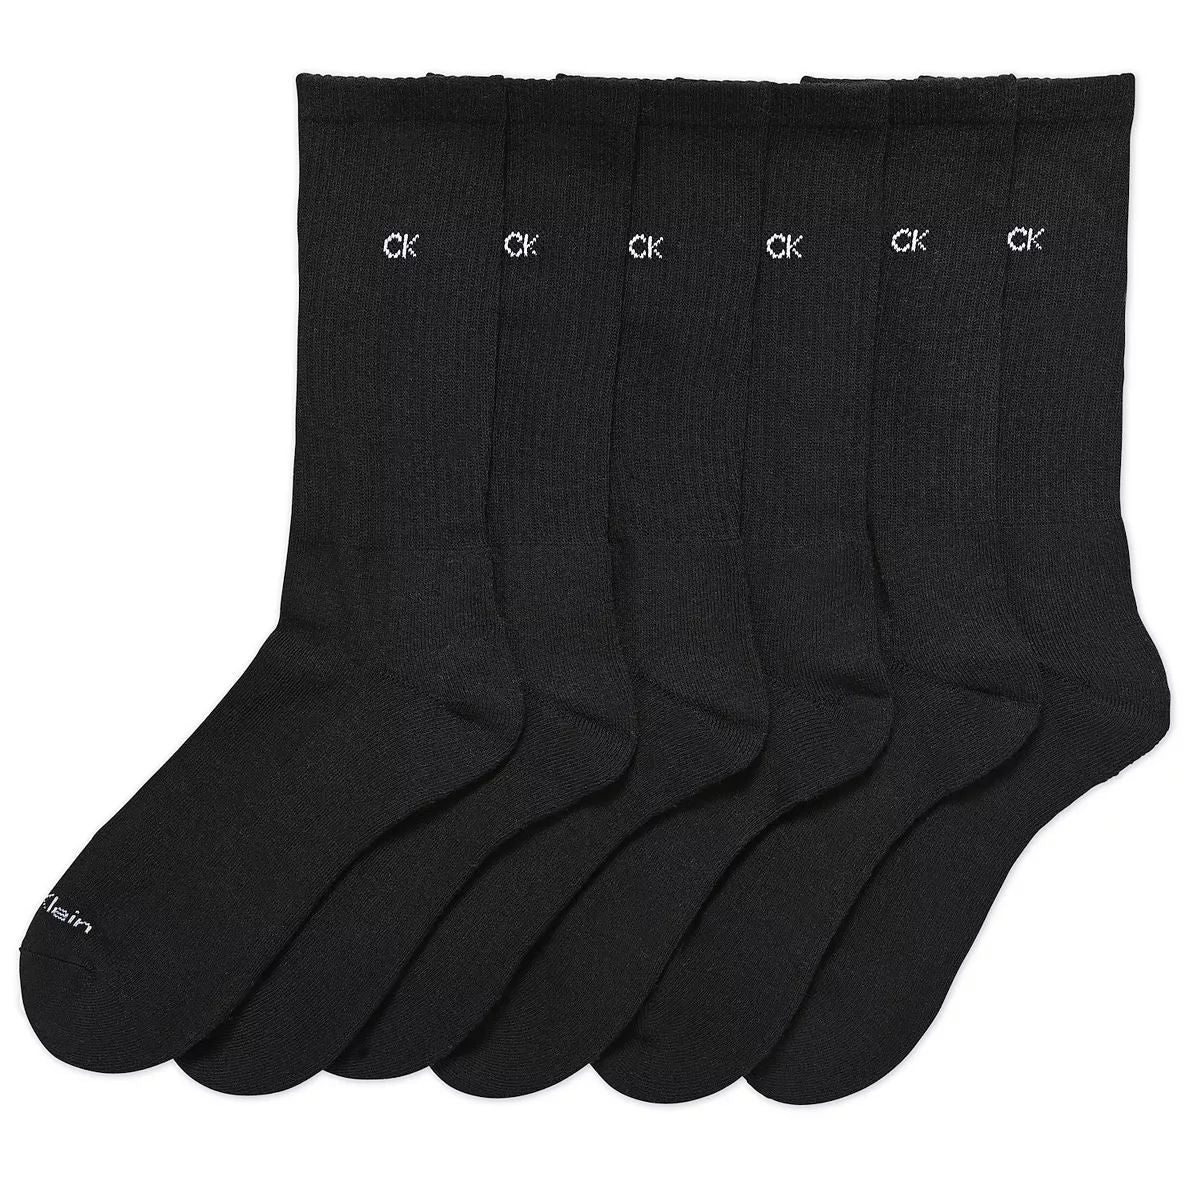 Men's 6 pack terry cushion crew sock